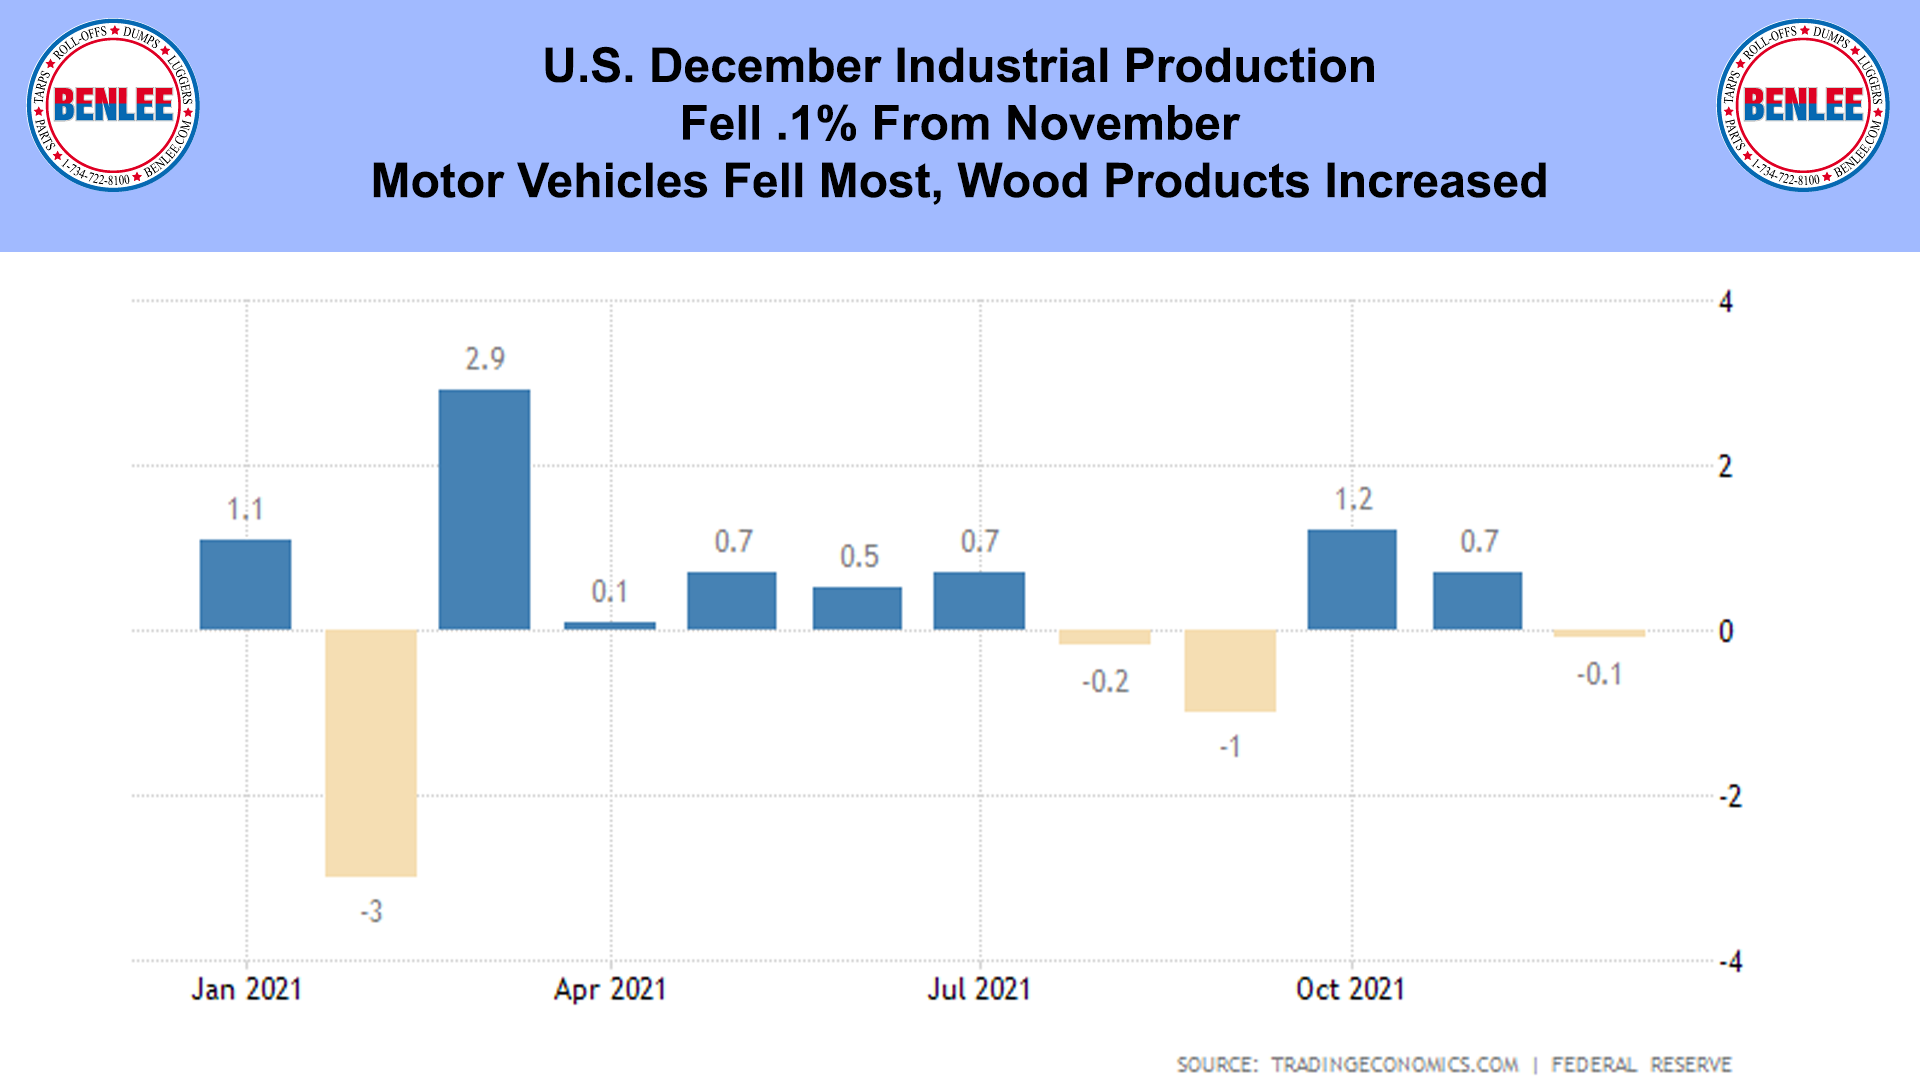 U.S. December Industrial Production